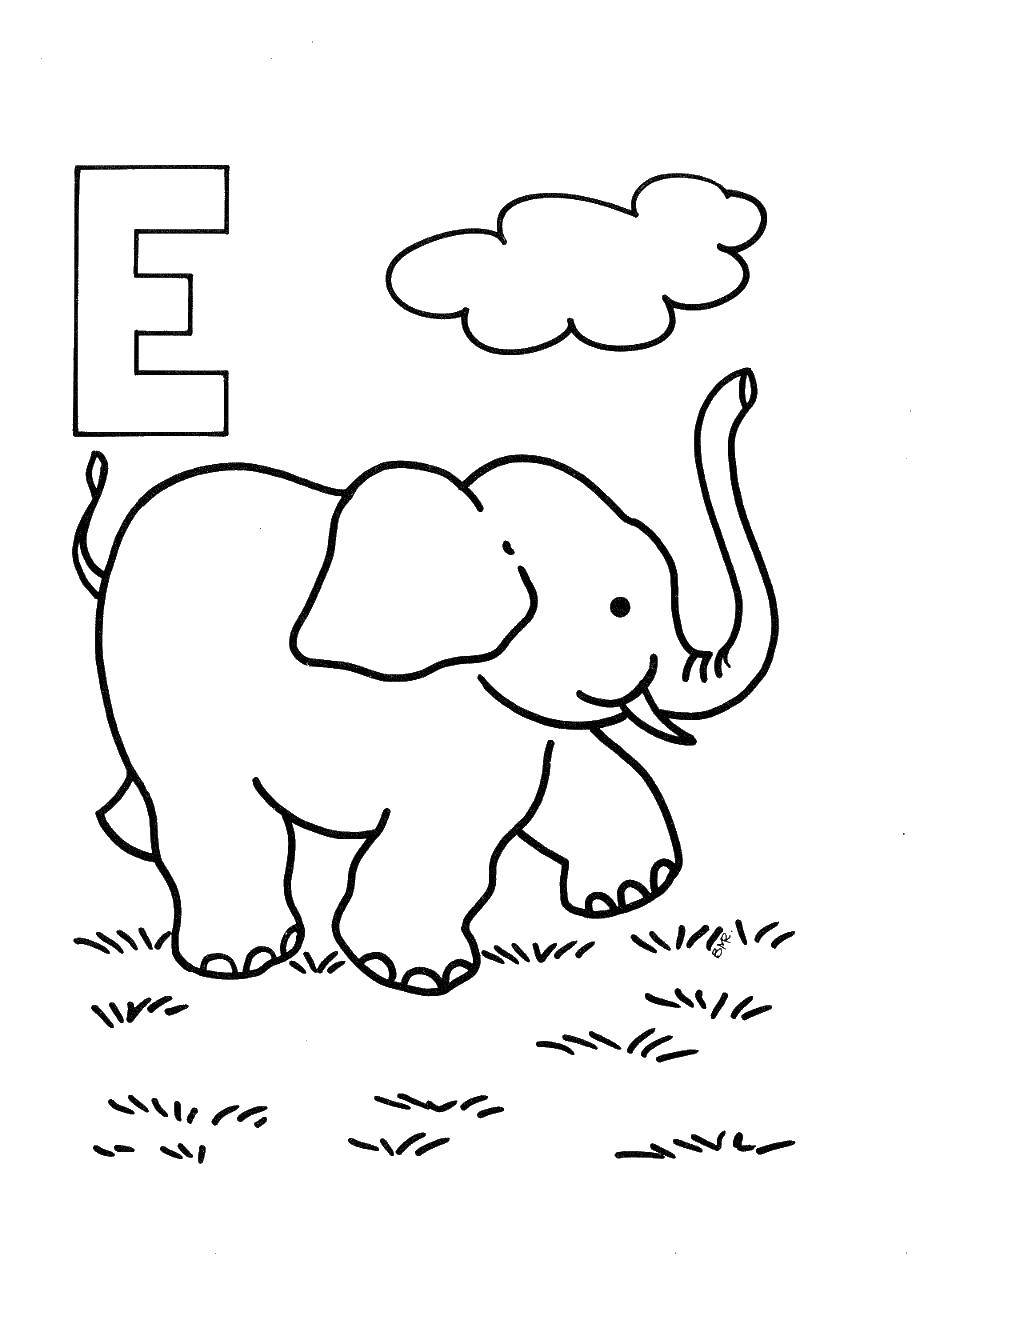 Coloring Elephant. Category English alphabet. Tags:  elephant, letter E.